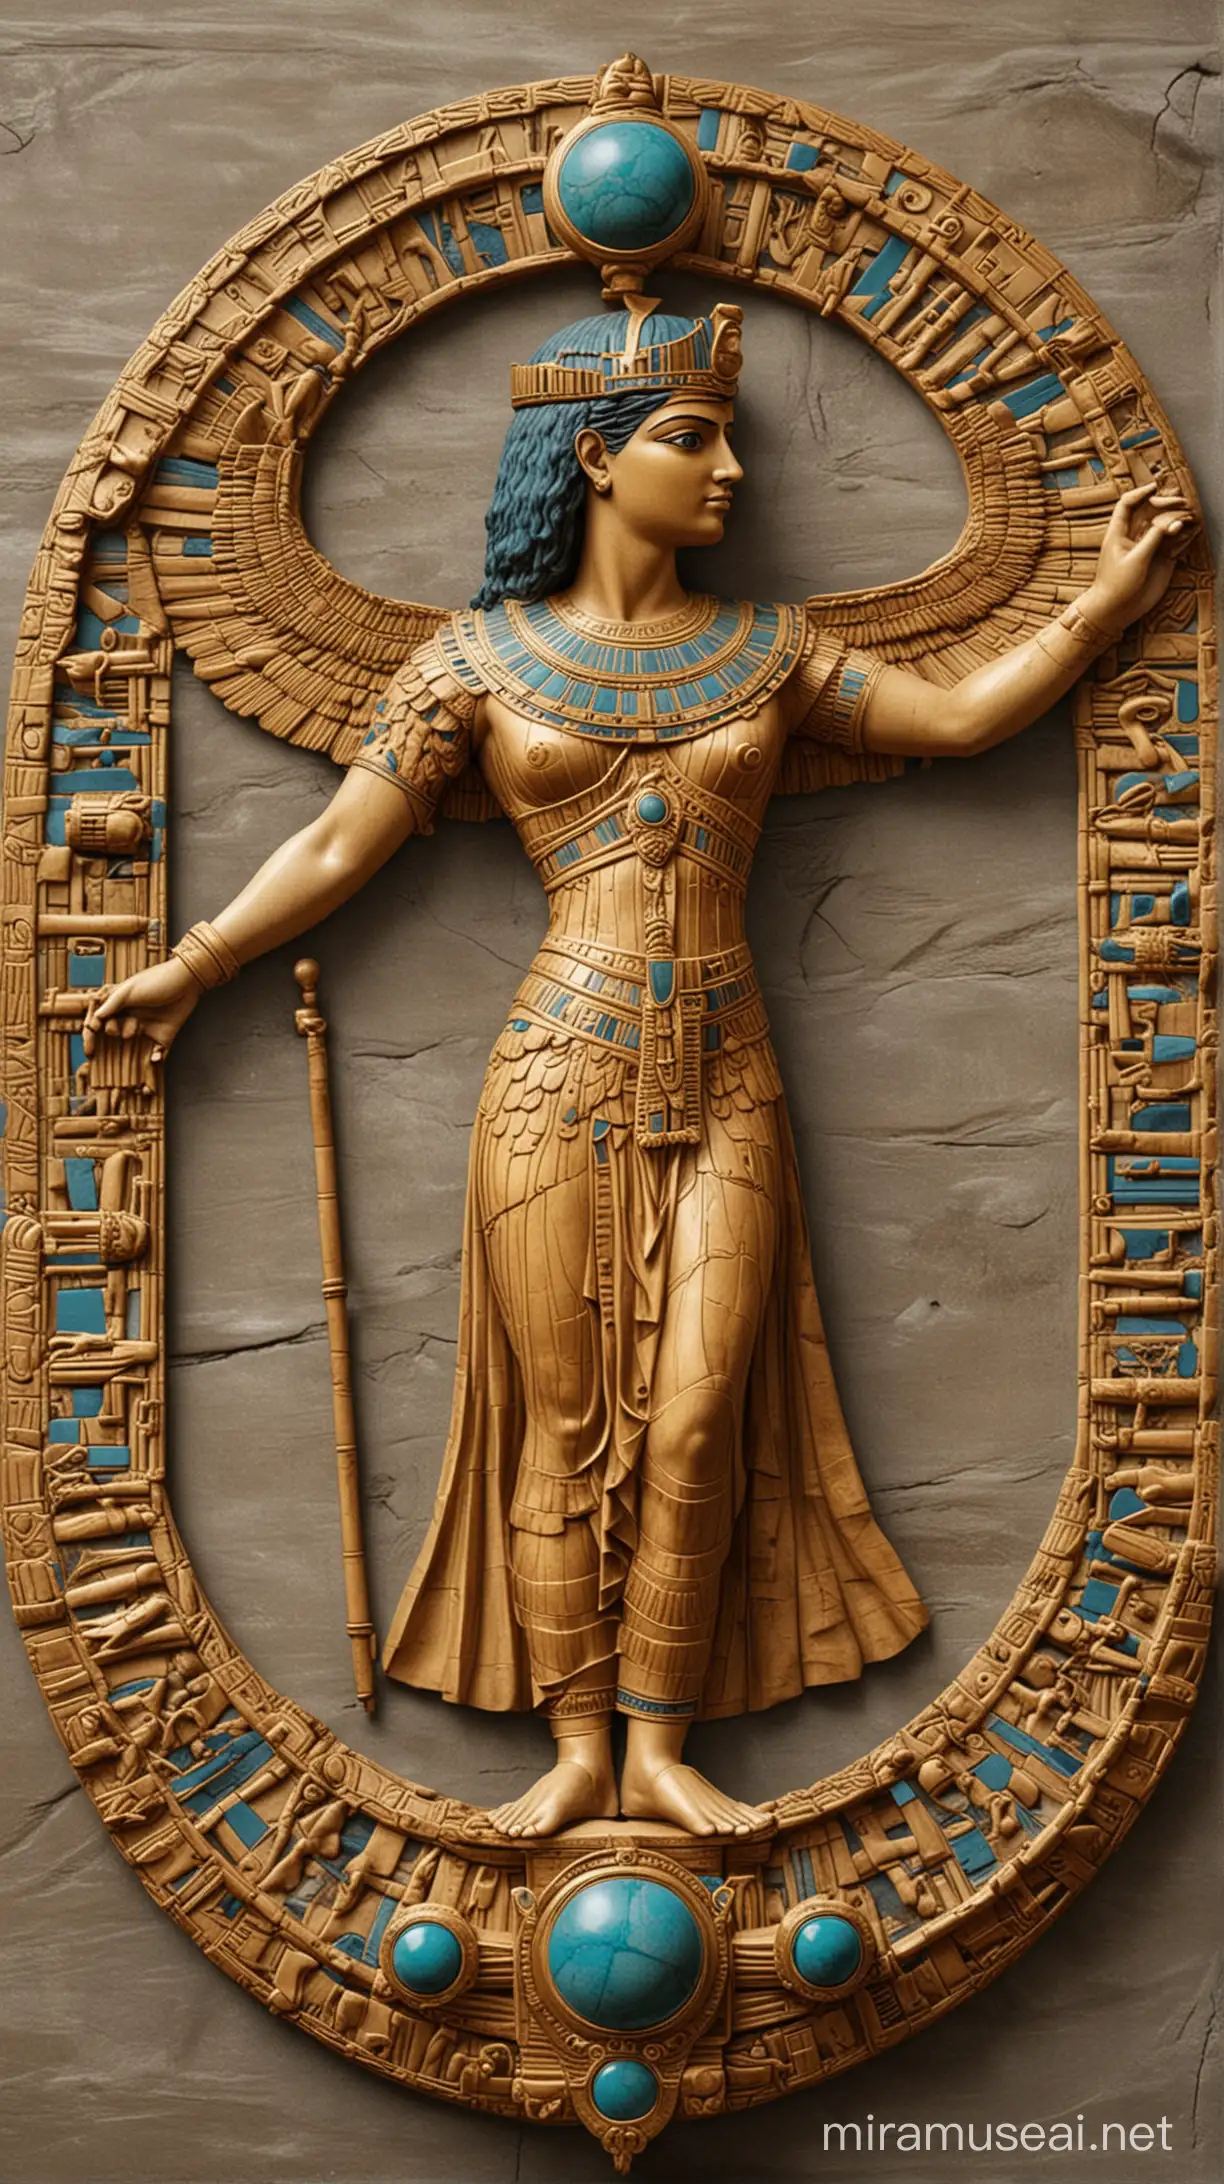 Hyperrealistic Ptolemaic Dynasty Emblem Symbolizing Cleopatras Royal Lineage